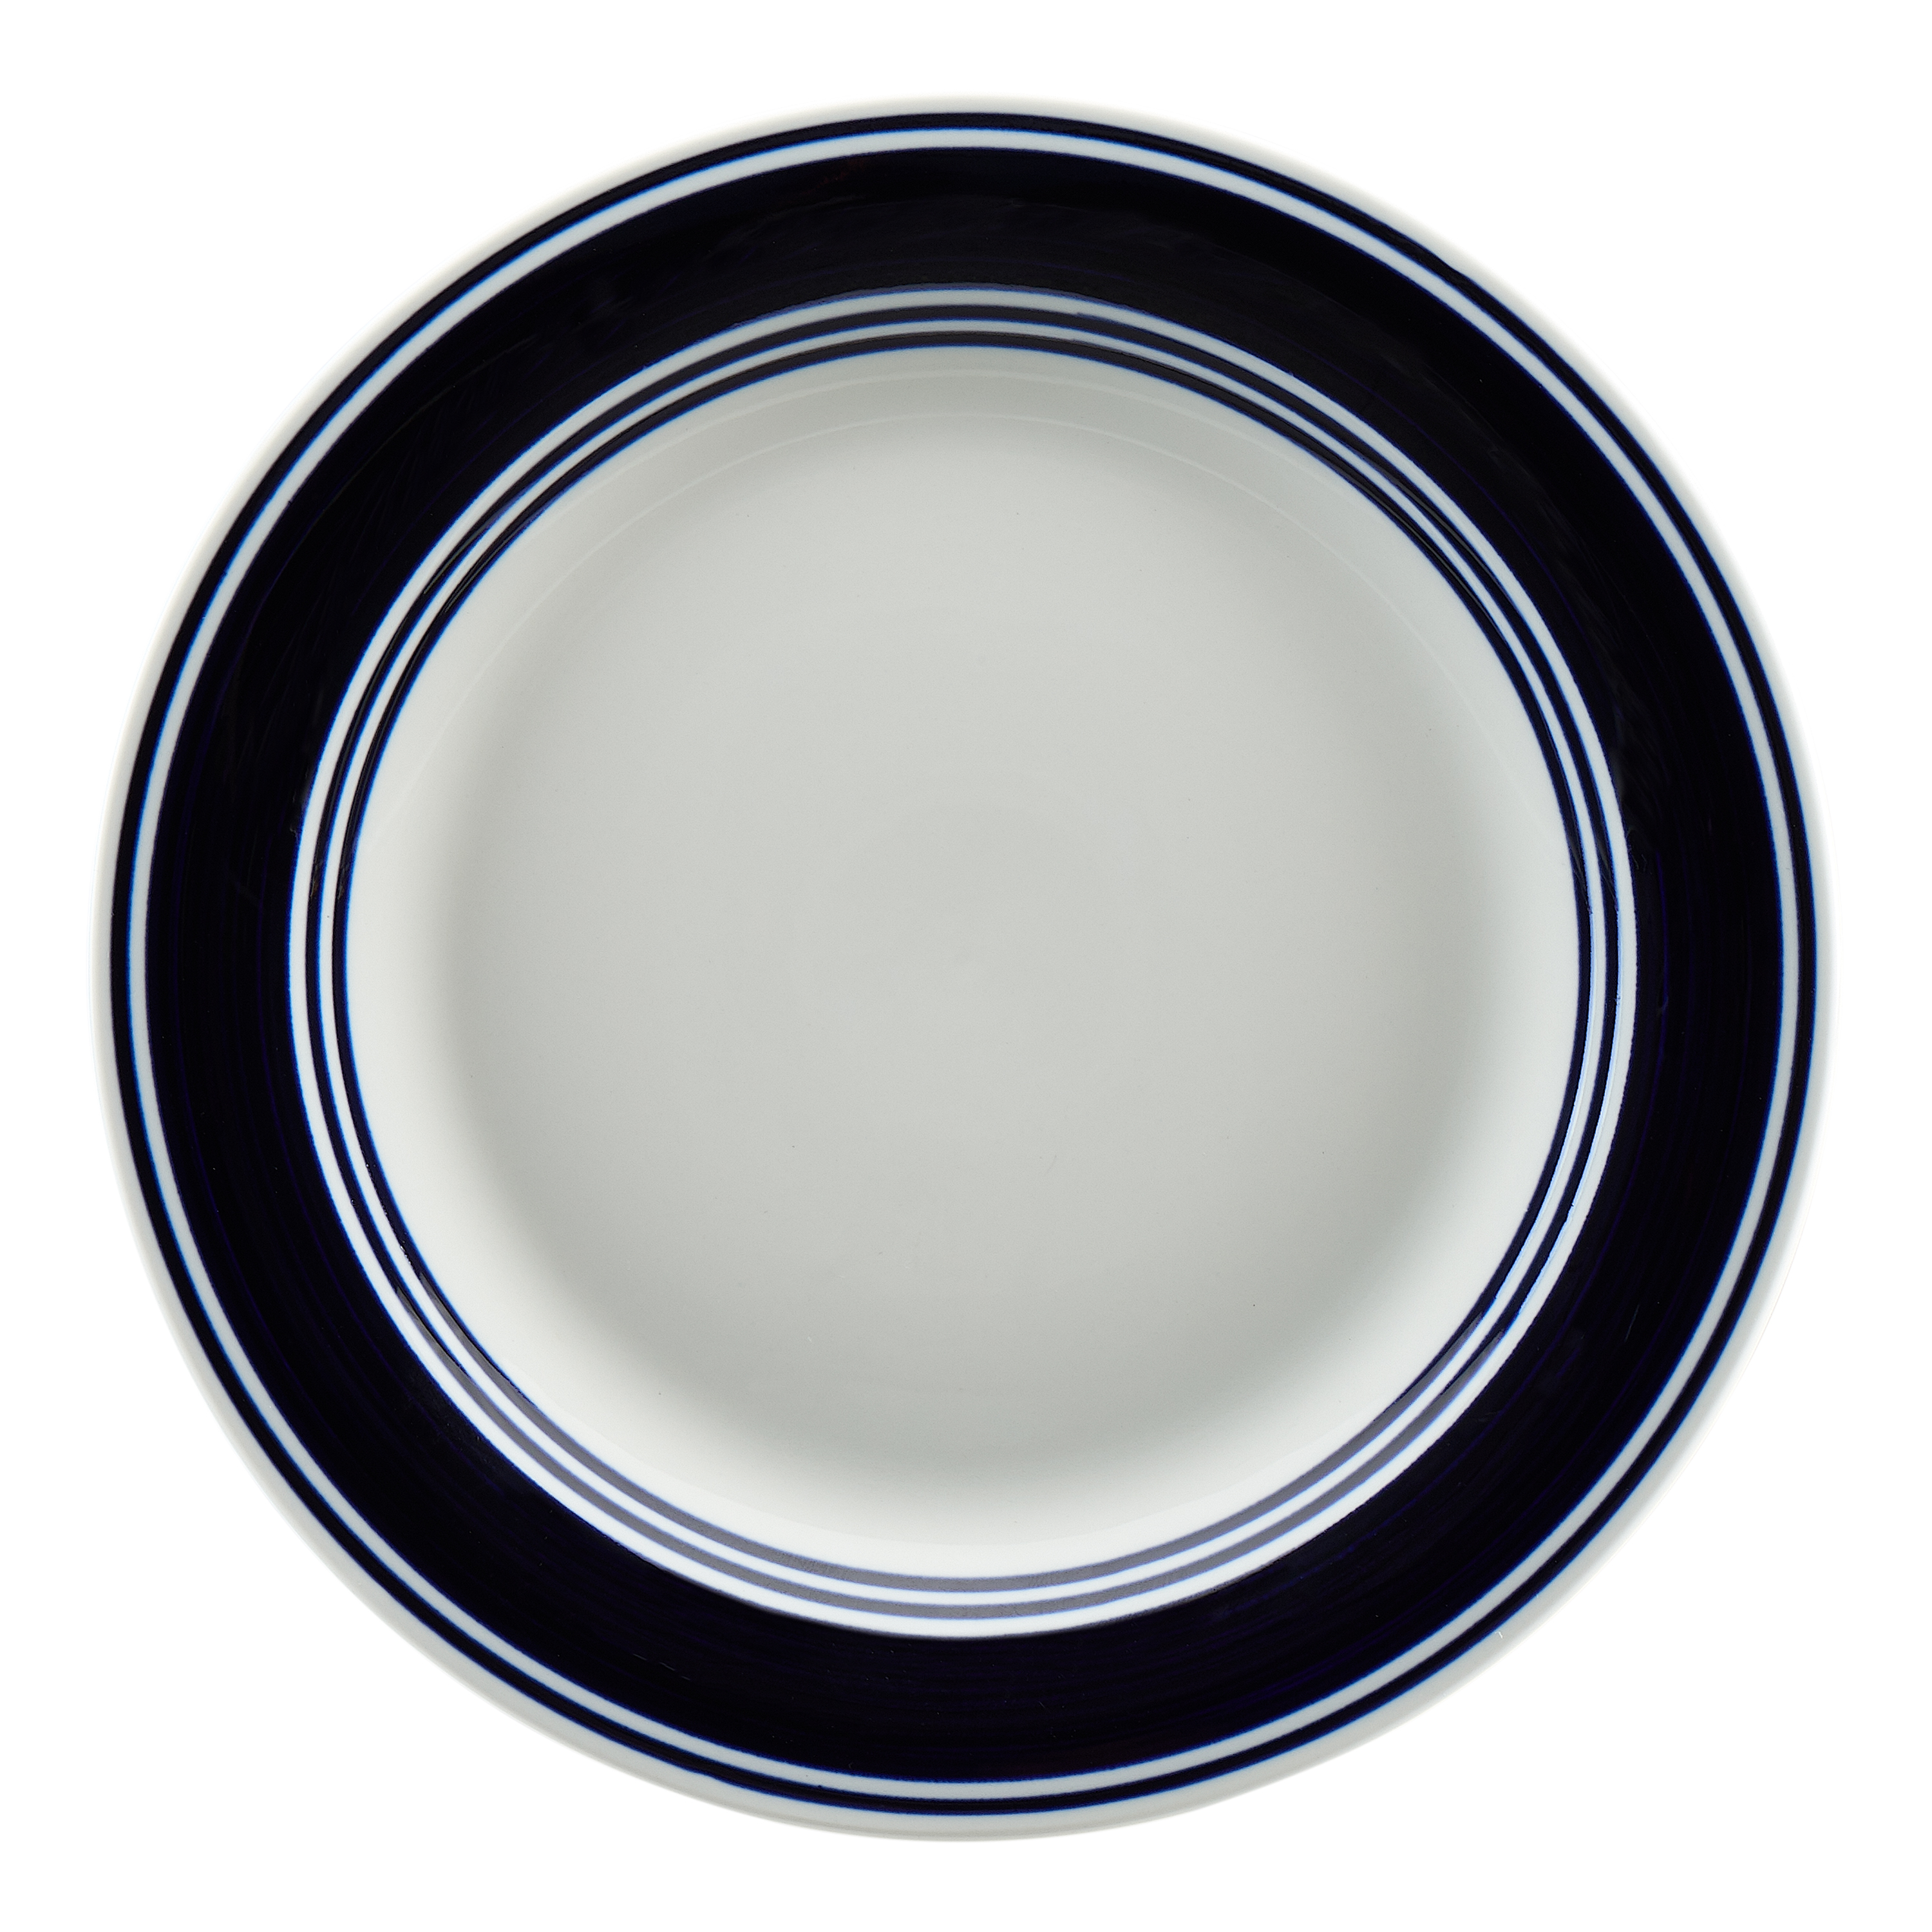 Mainstays Blue Banded 12-Piece Stoneware Dinnerware Set - image 2 of 6